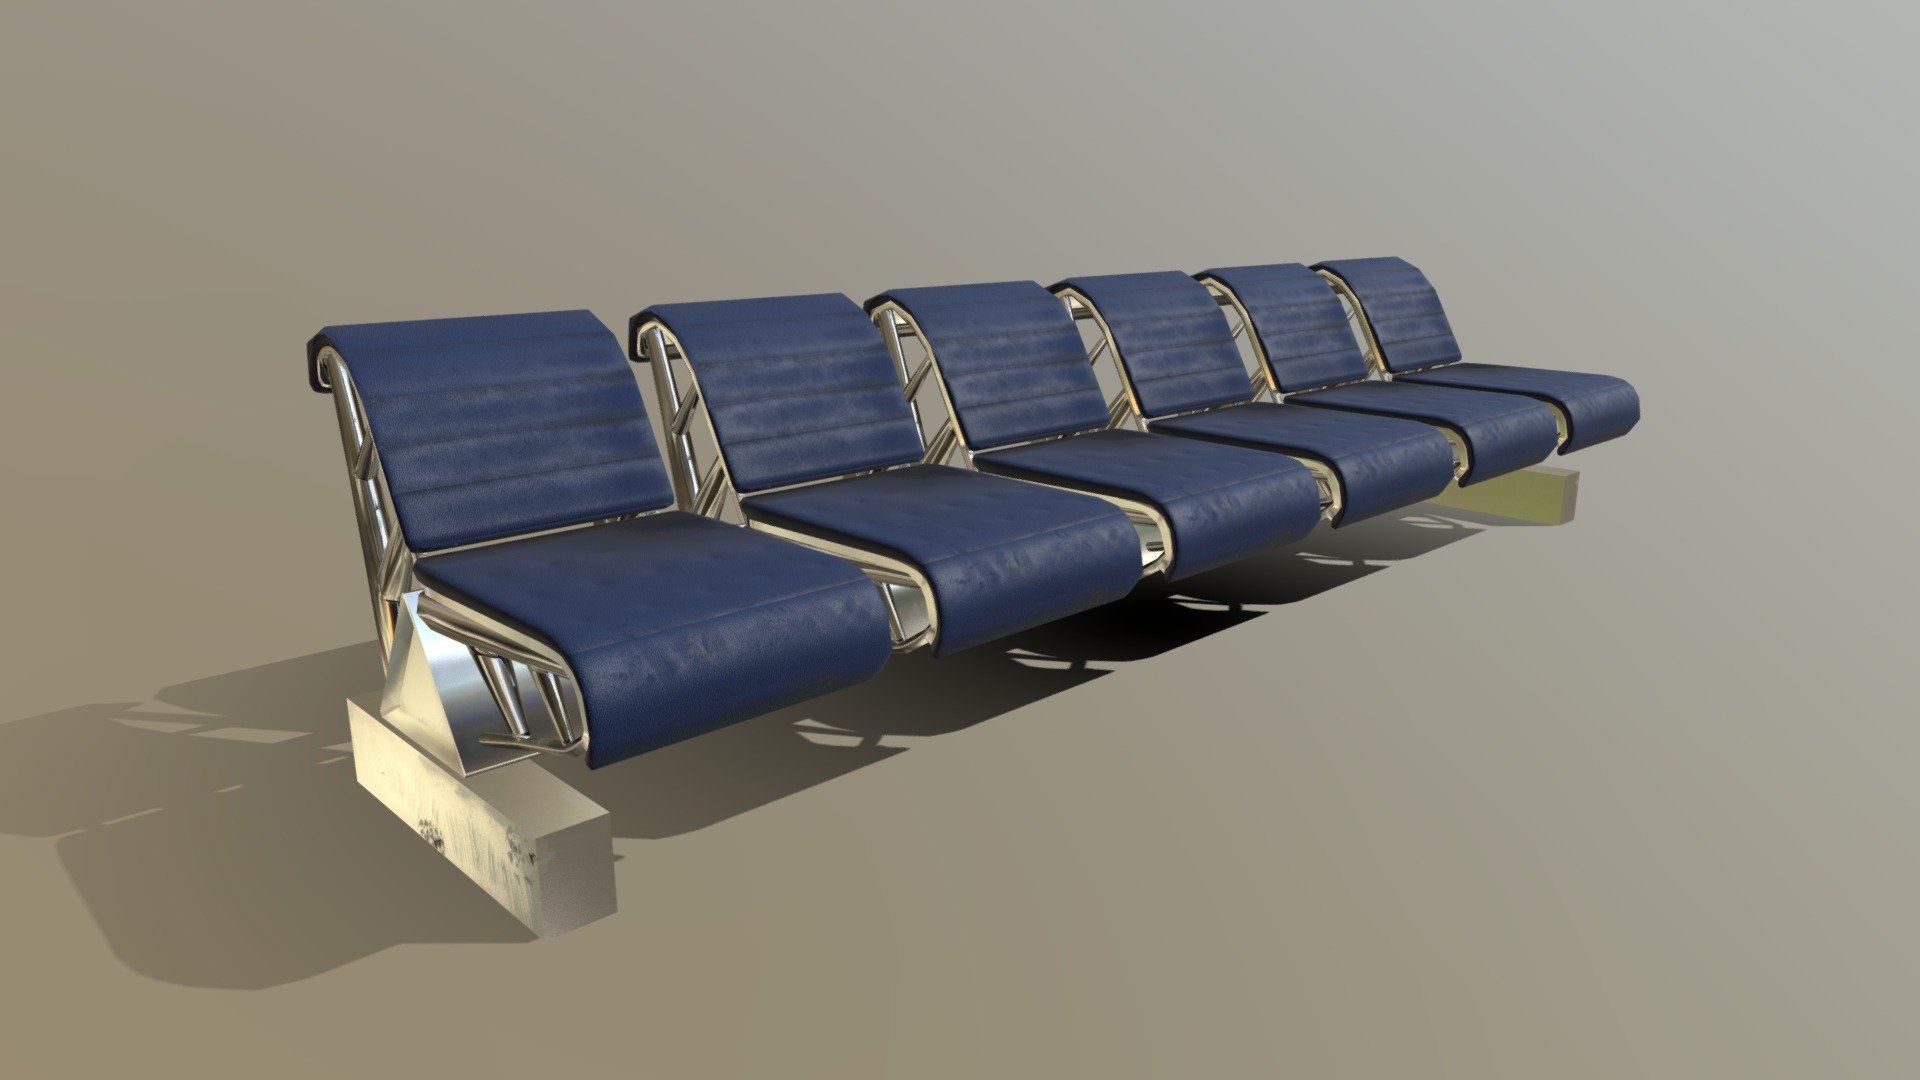 Airport seats